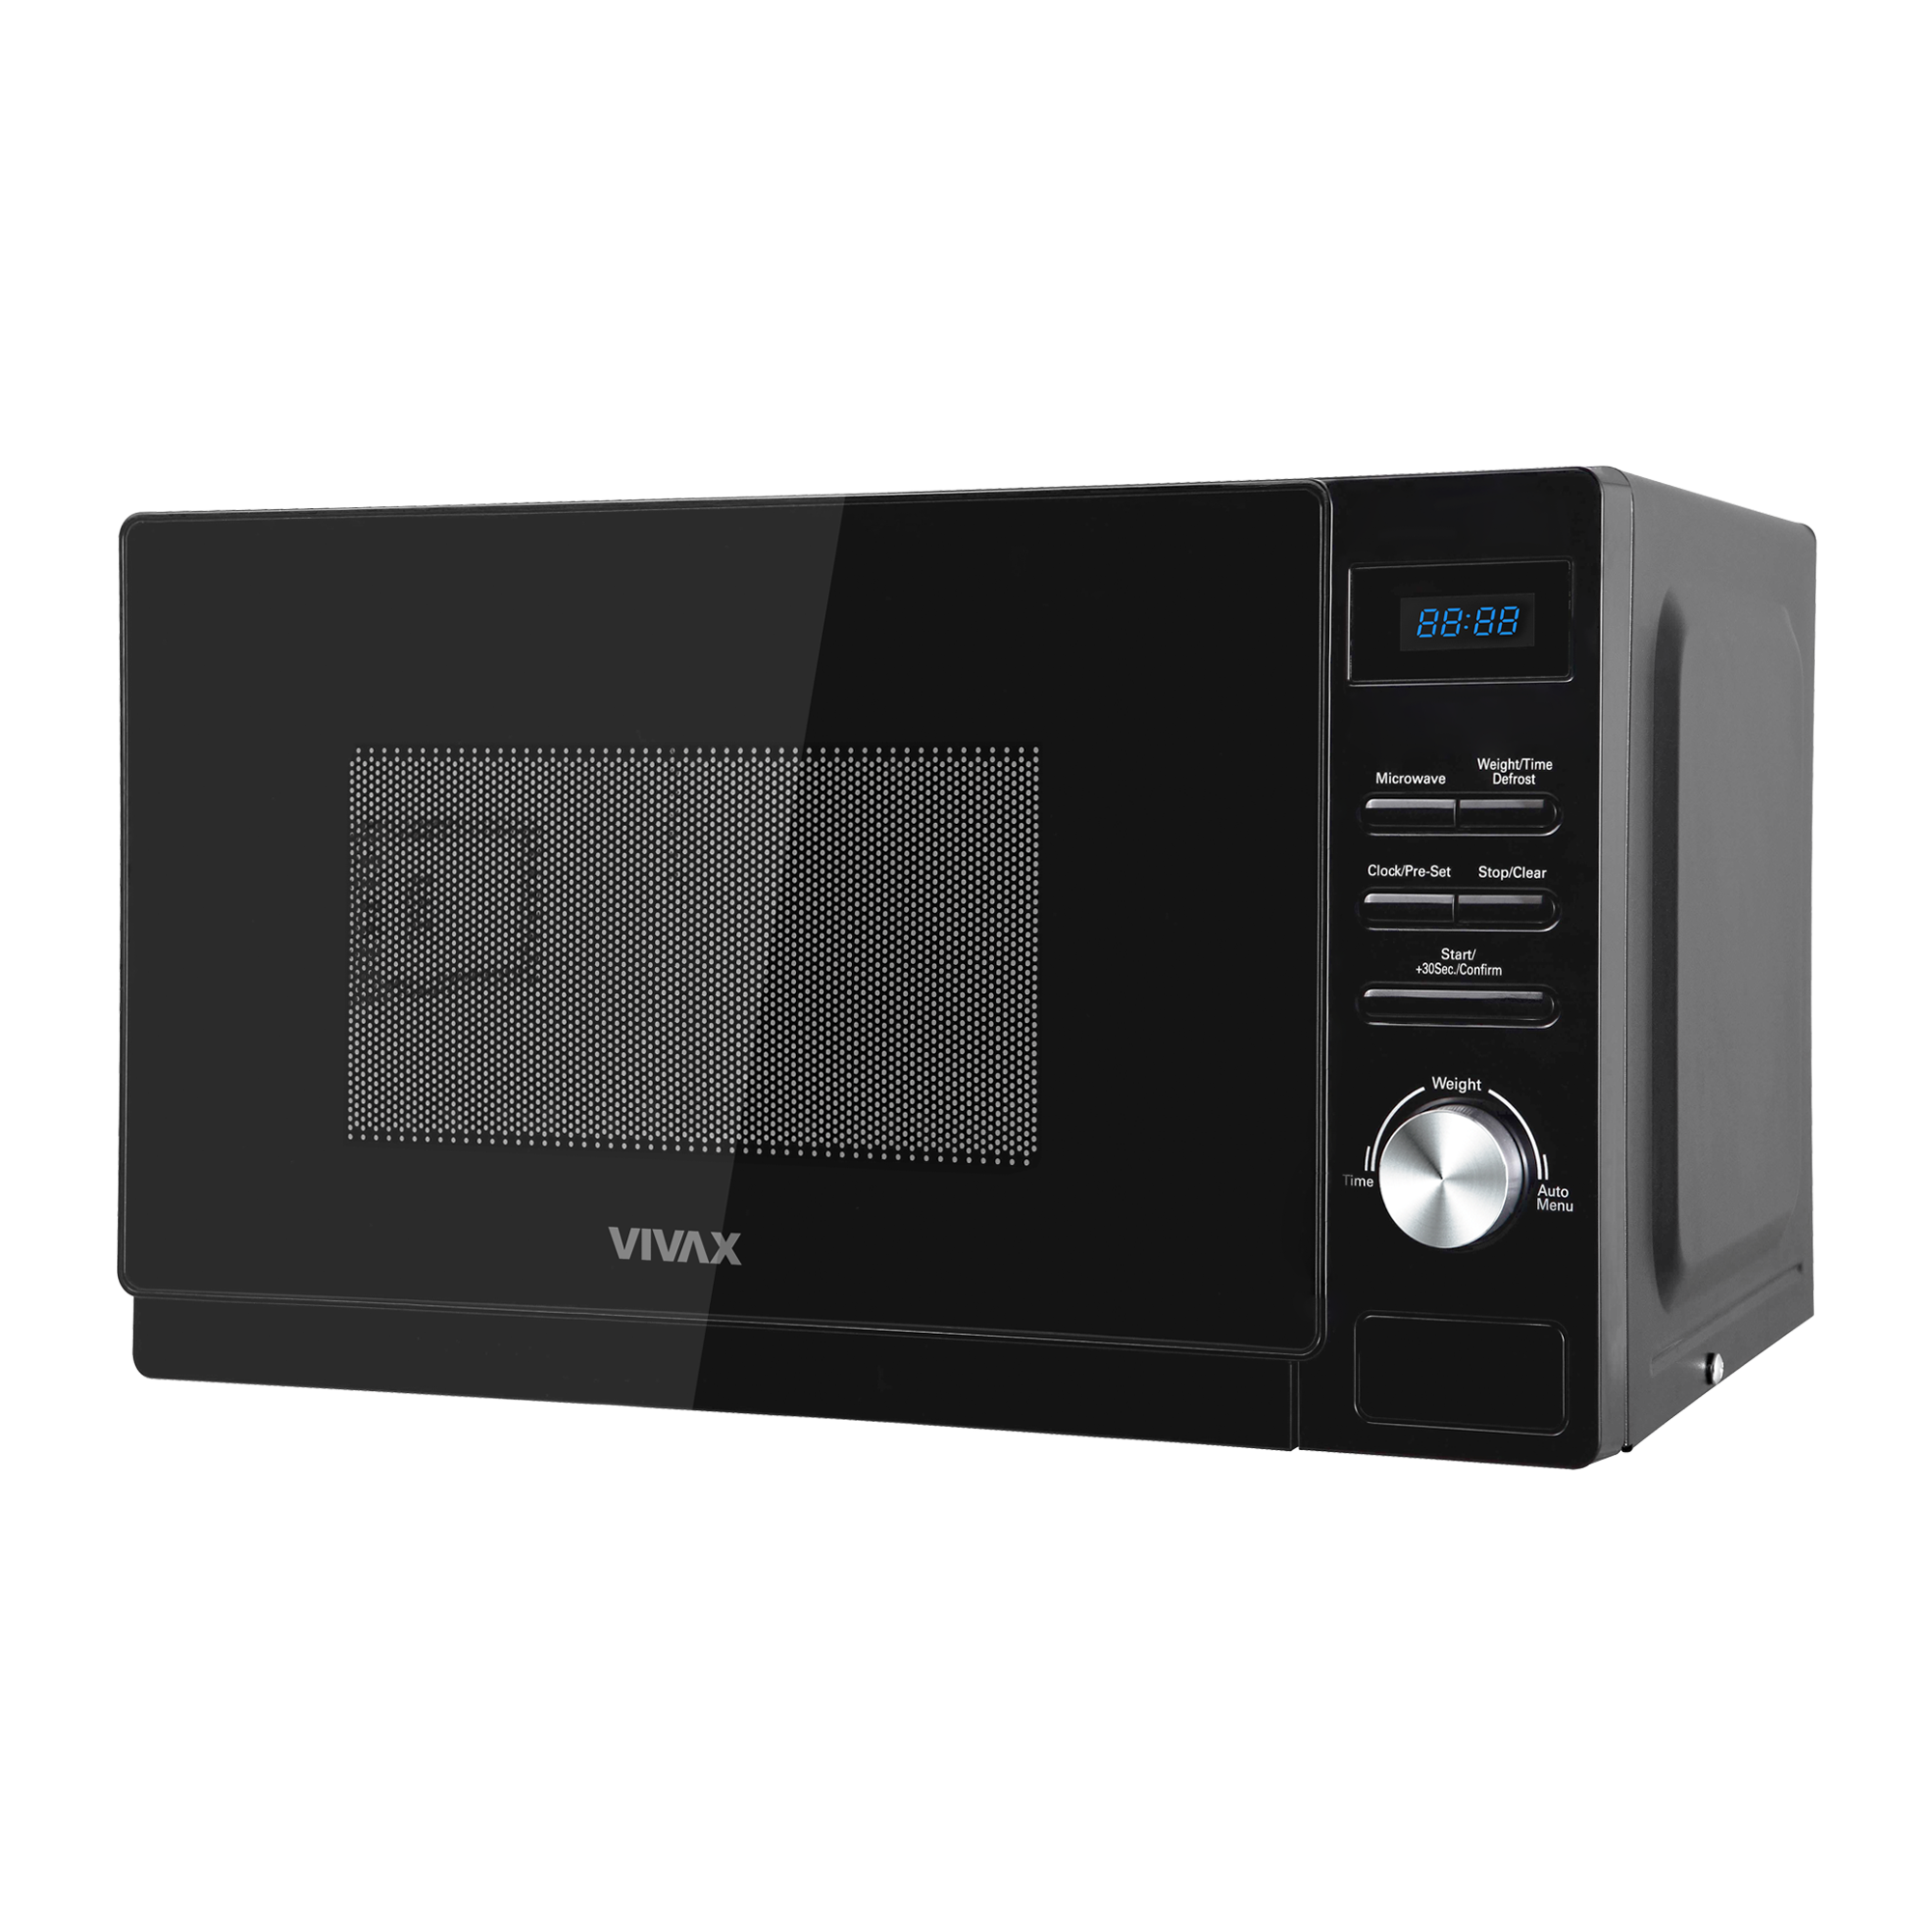 VIVAX mikrovalna pećnica MWO-2070 BL